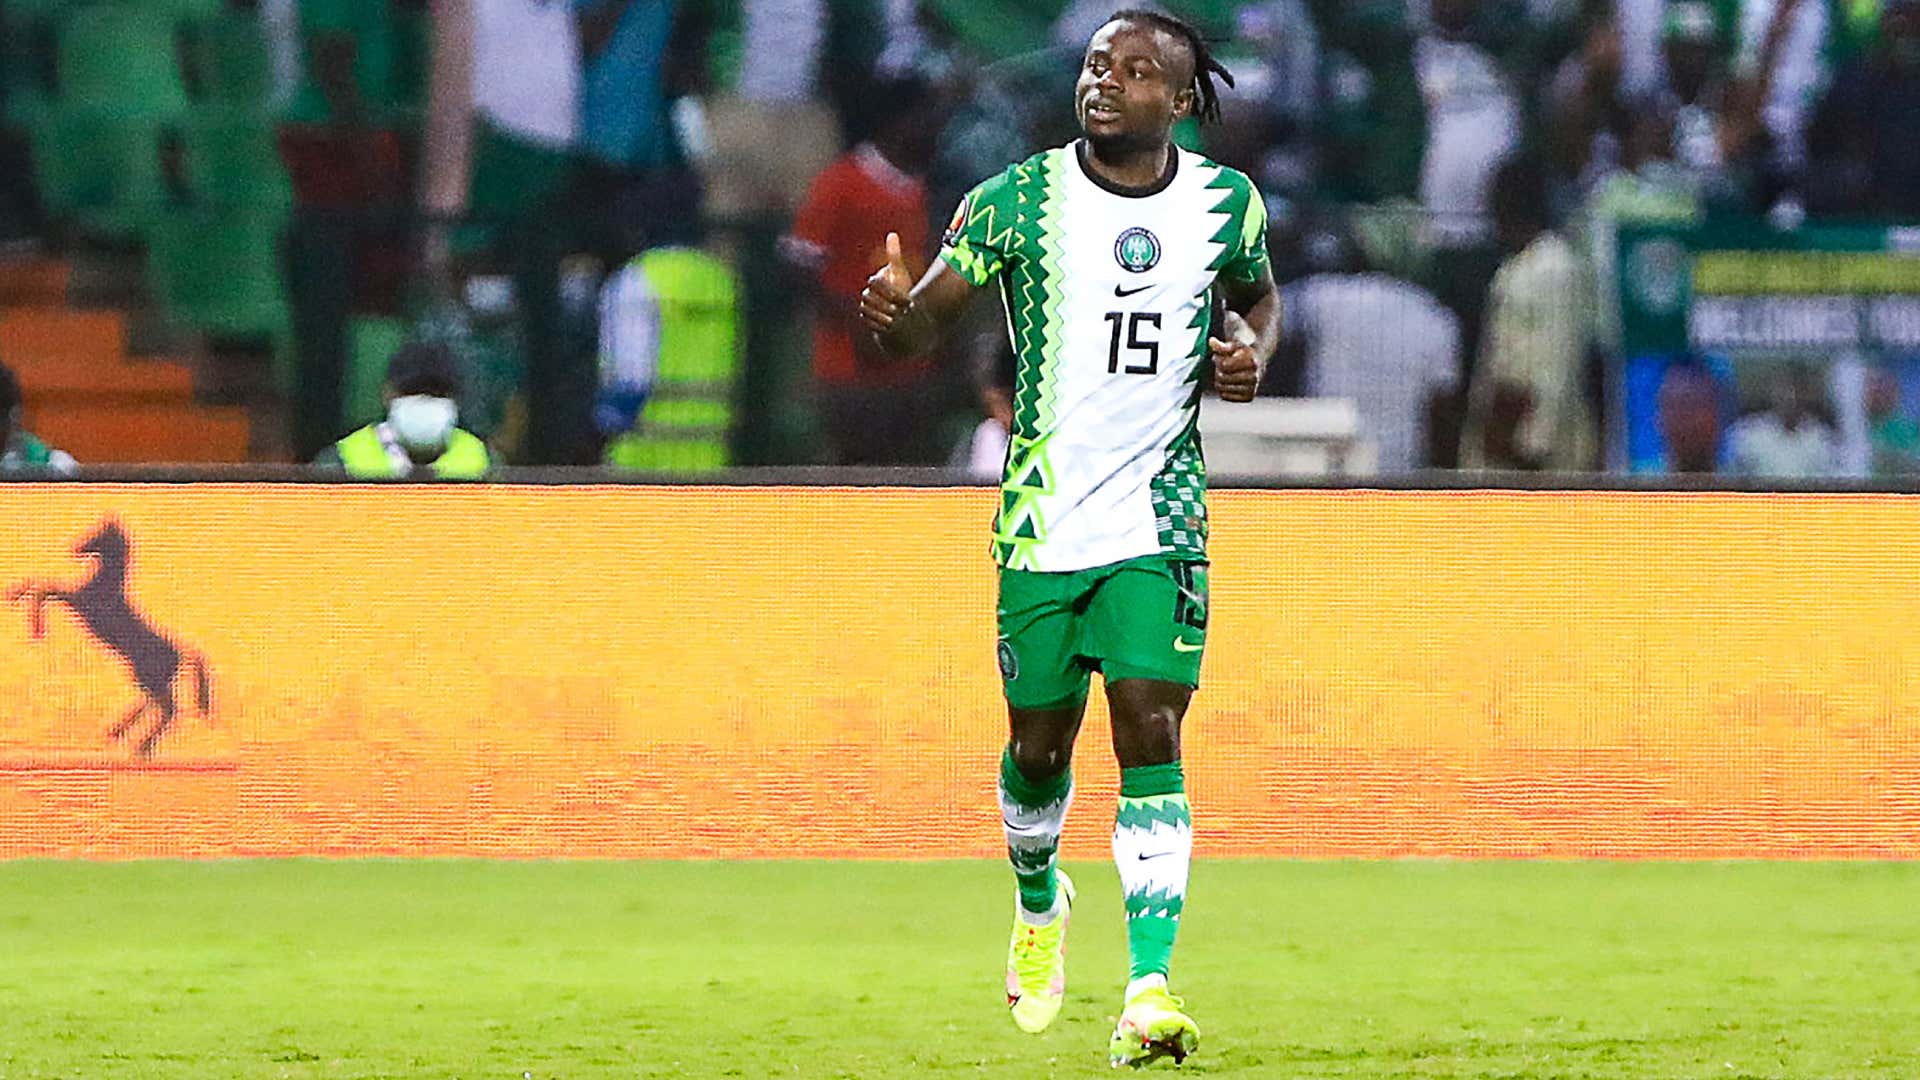 Afcon 2021: Nigeria vs Tunisia - Where the game will be won and lost | Goal.com